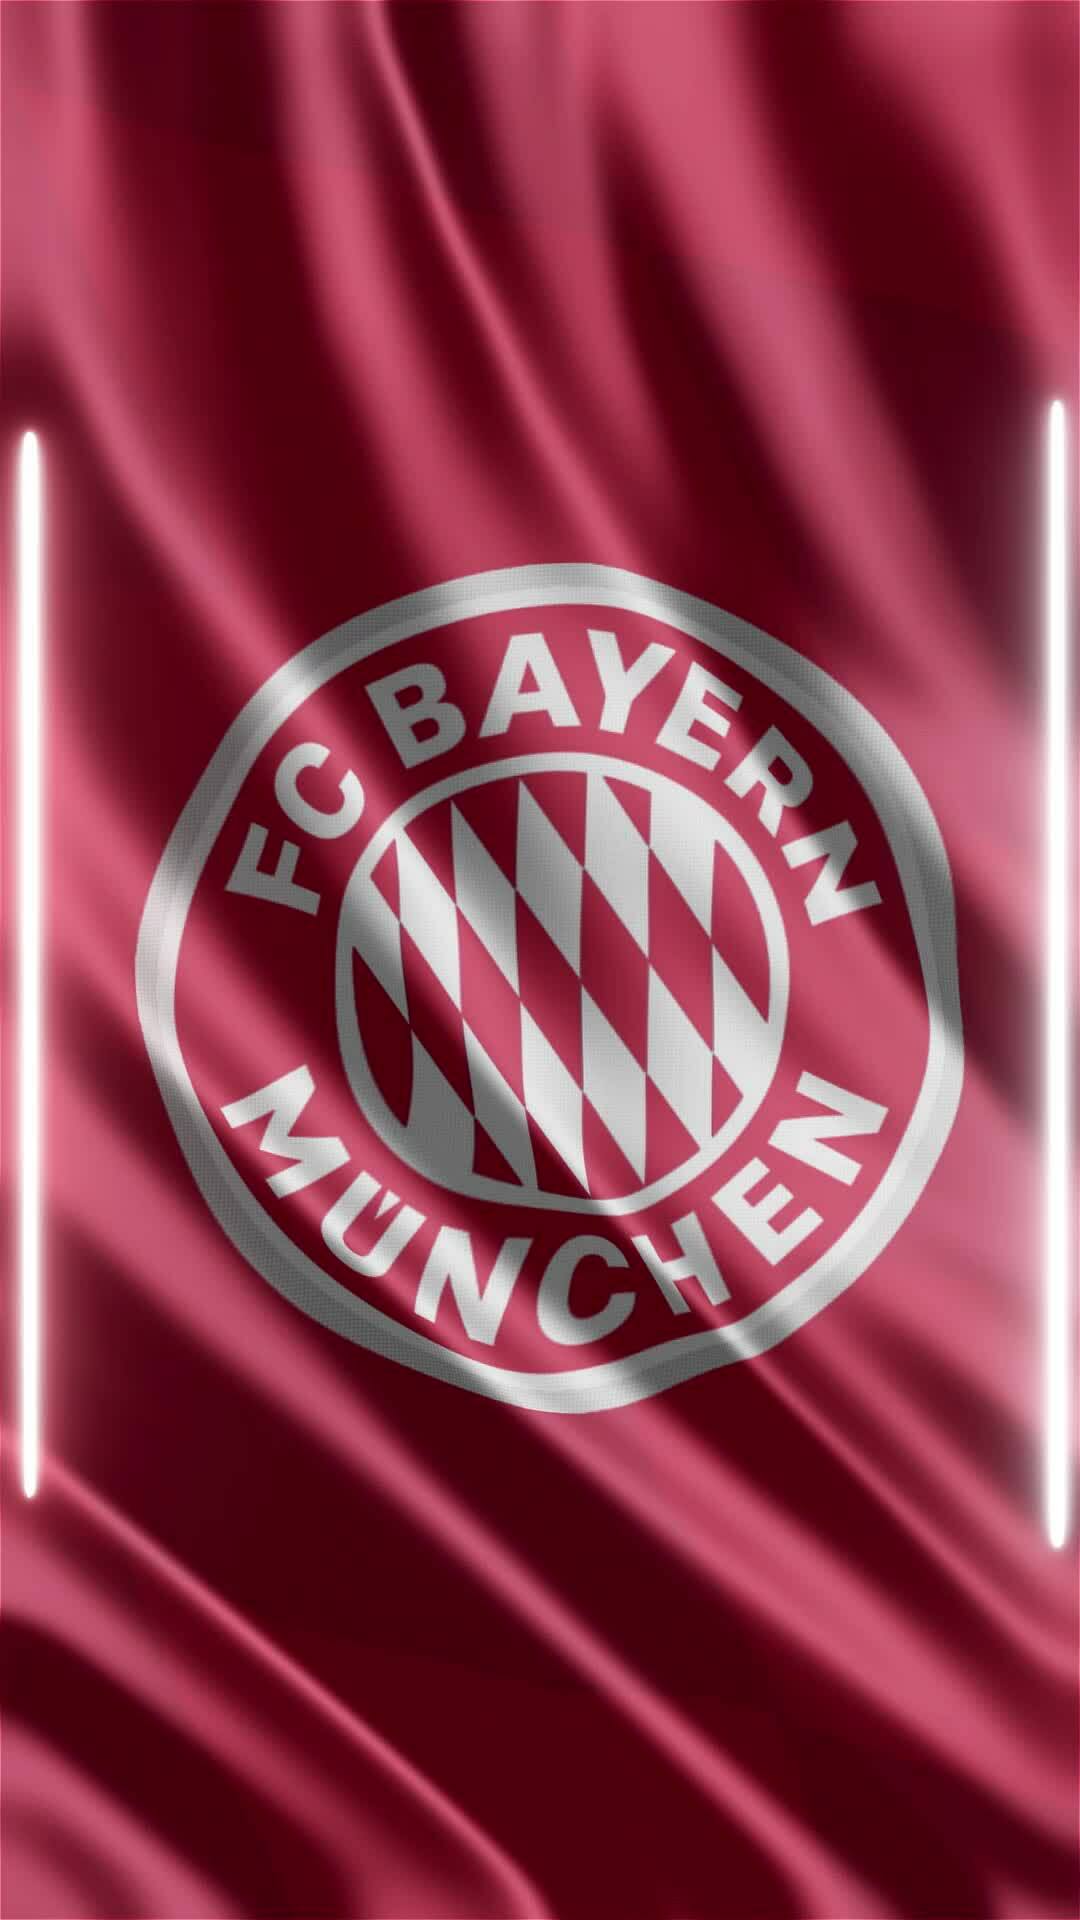 FC Bayern Munich flag is waving on transparent background. Close